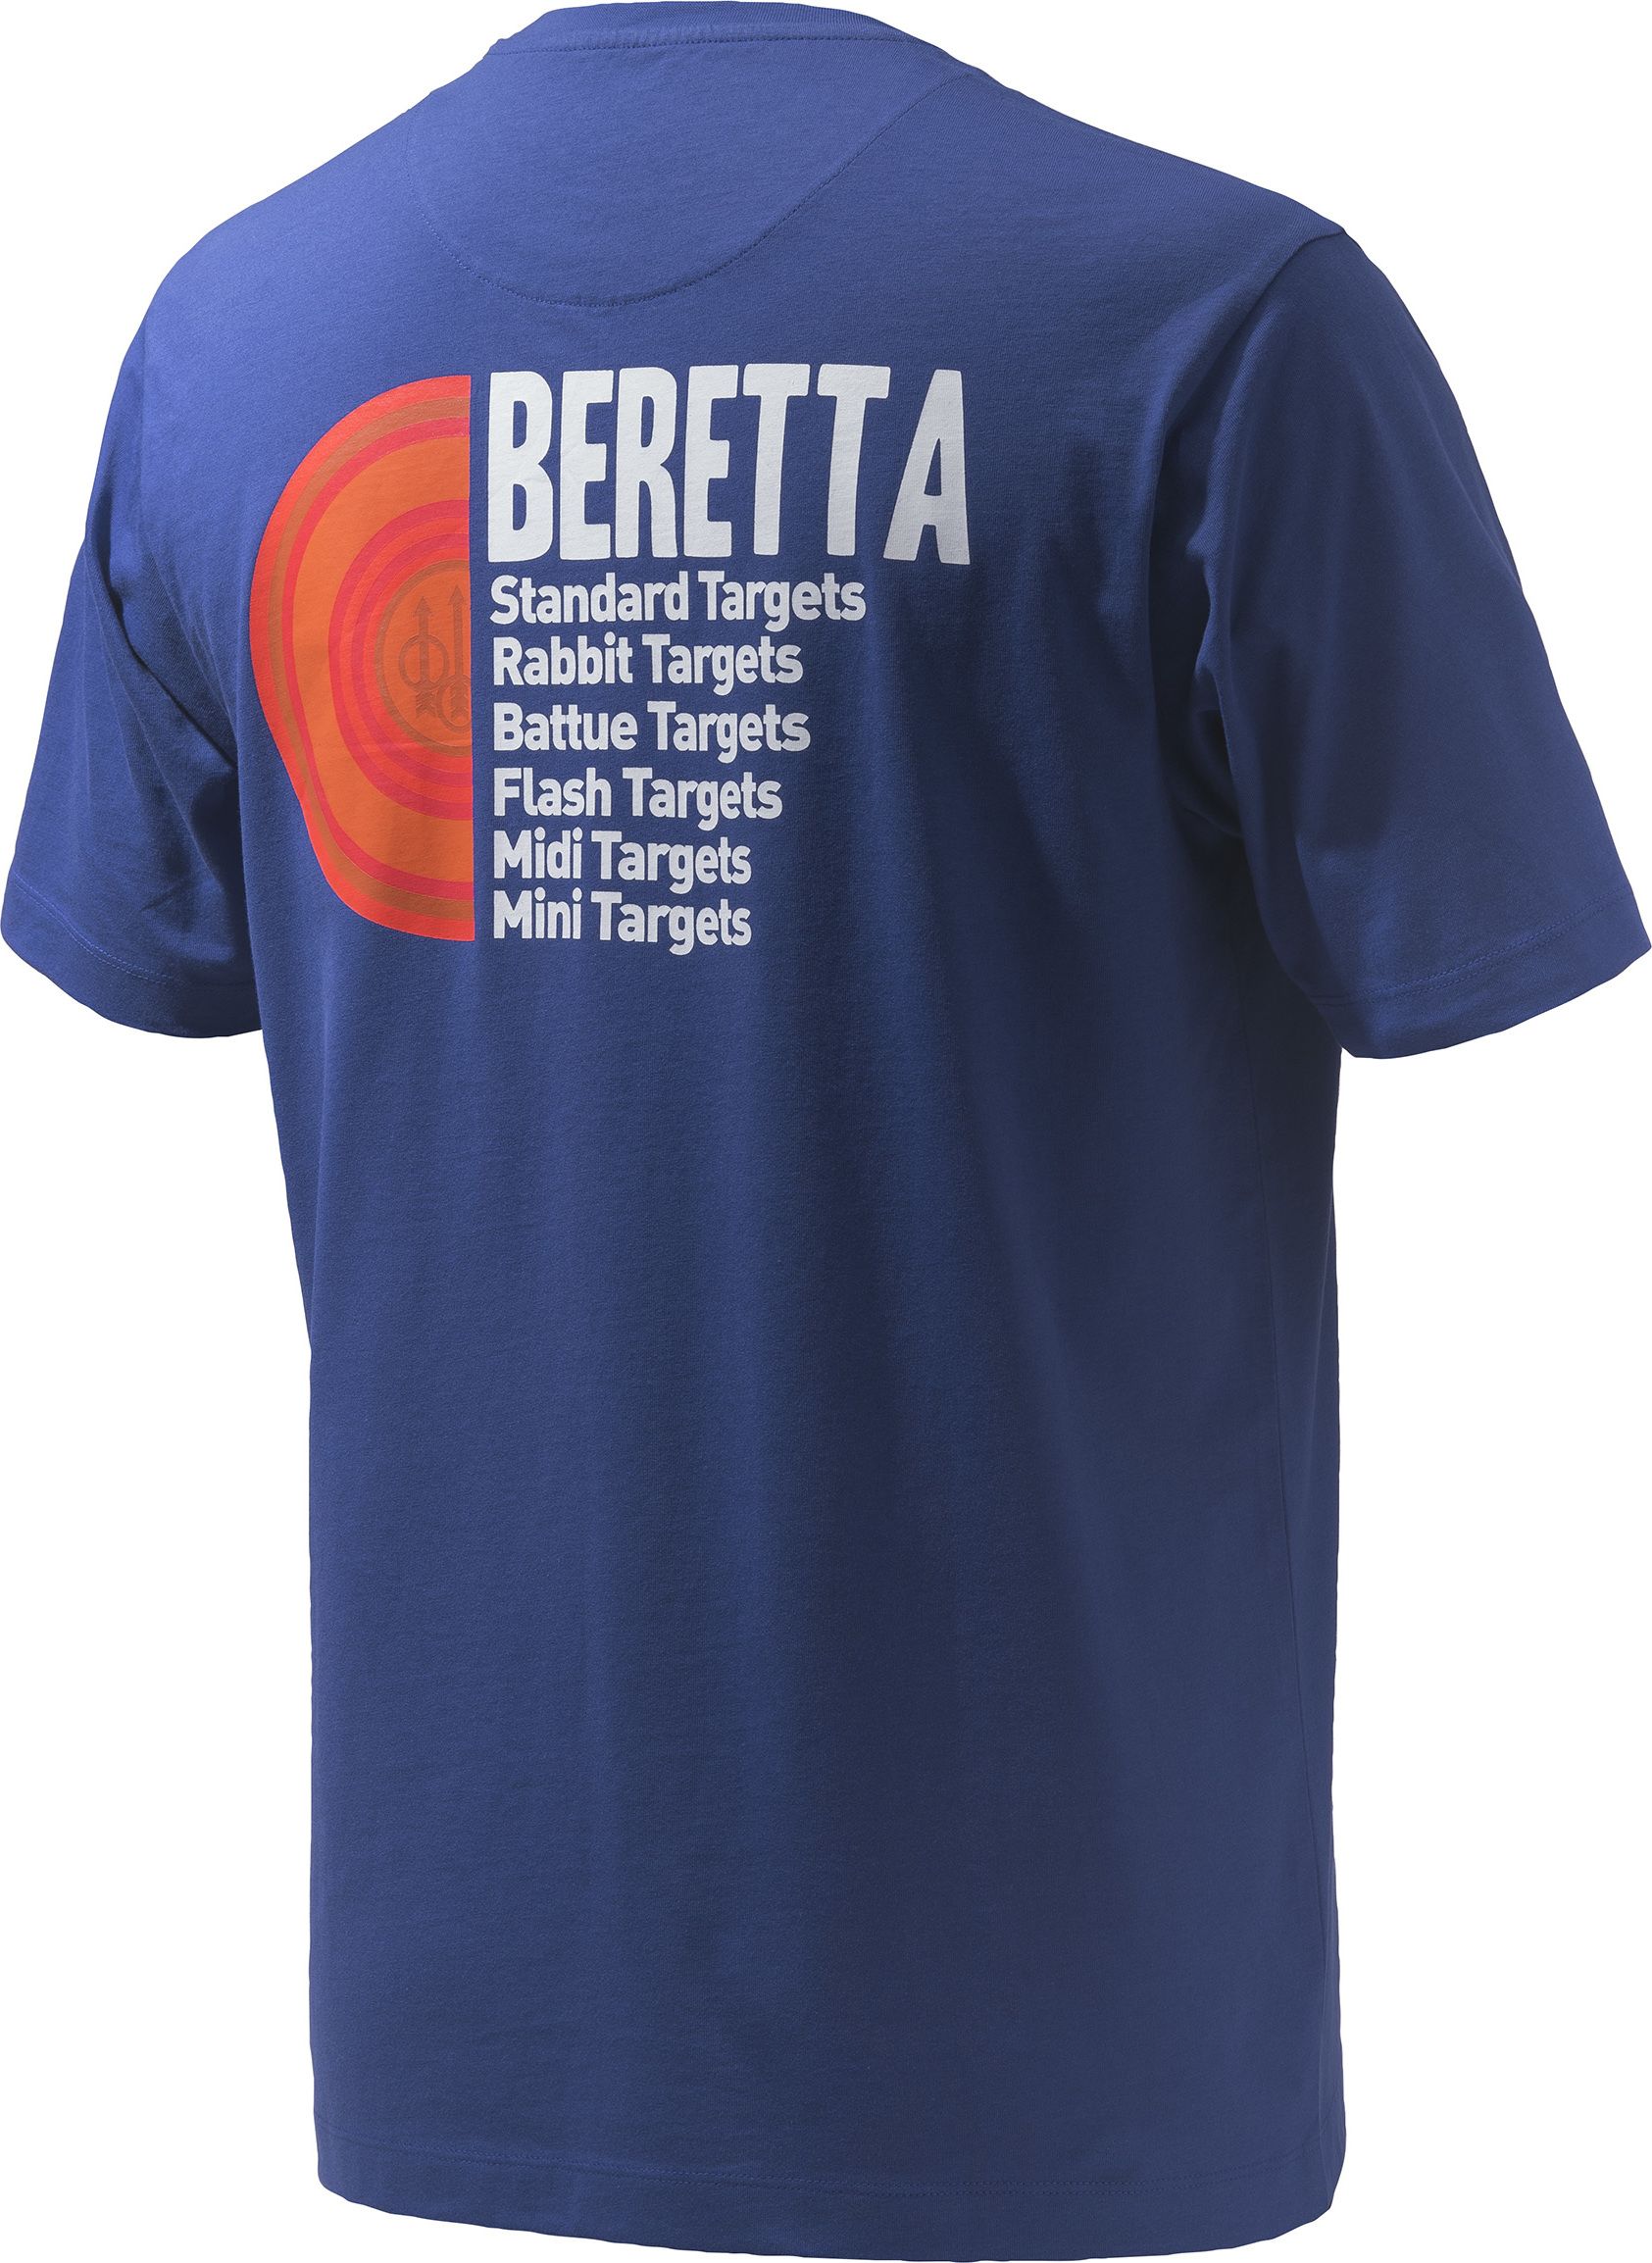 Men's Diskgraphic T-shirt Blue Beretta